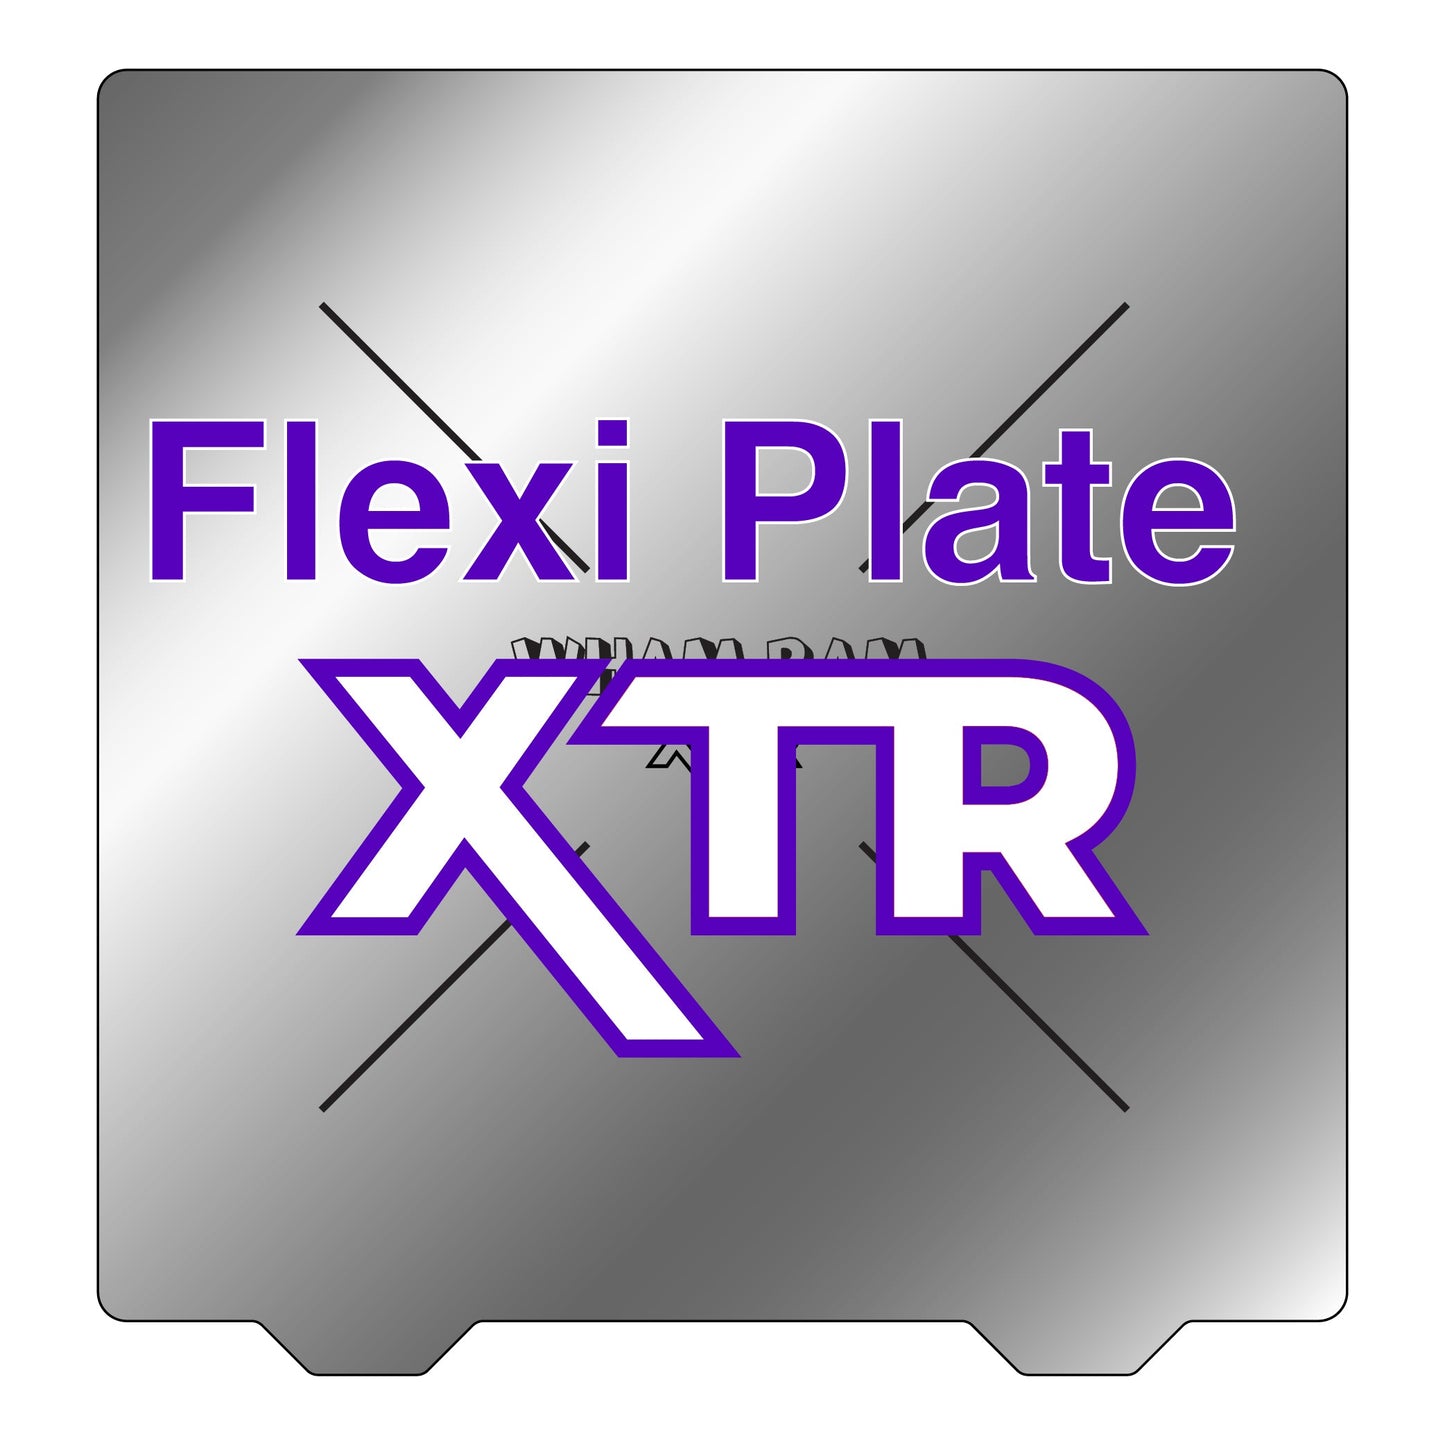 XTR Flexi Plate Only (No Build Surface) - 305 x 305 - Voron 2.4 300 and Voron Trident 300